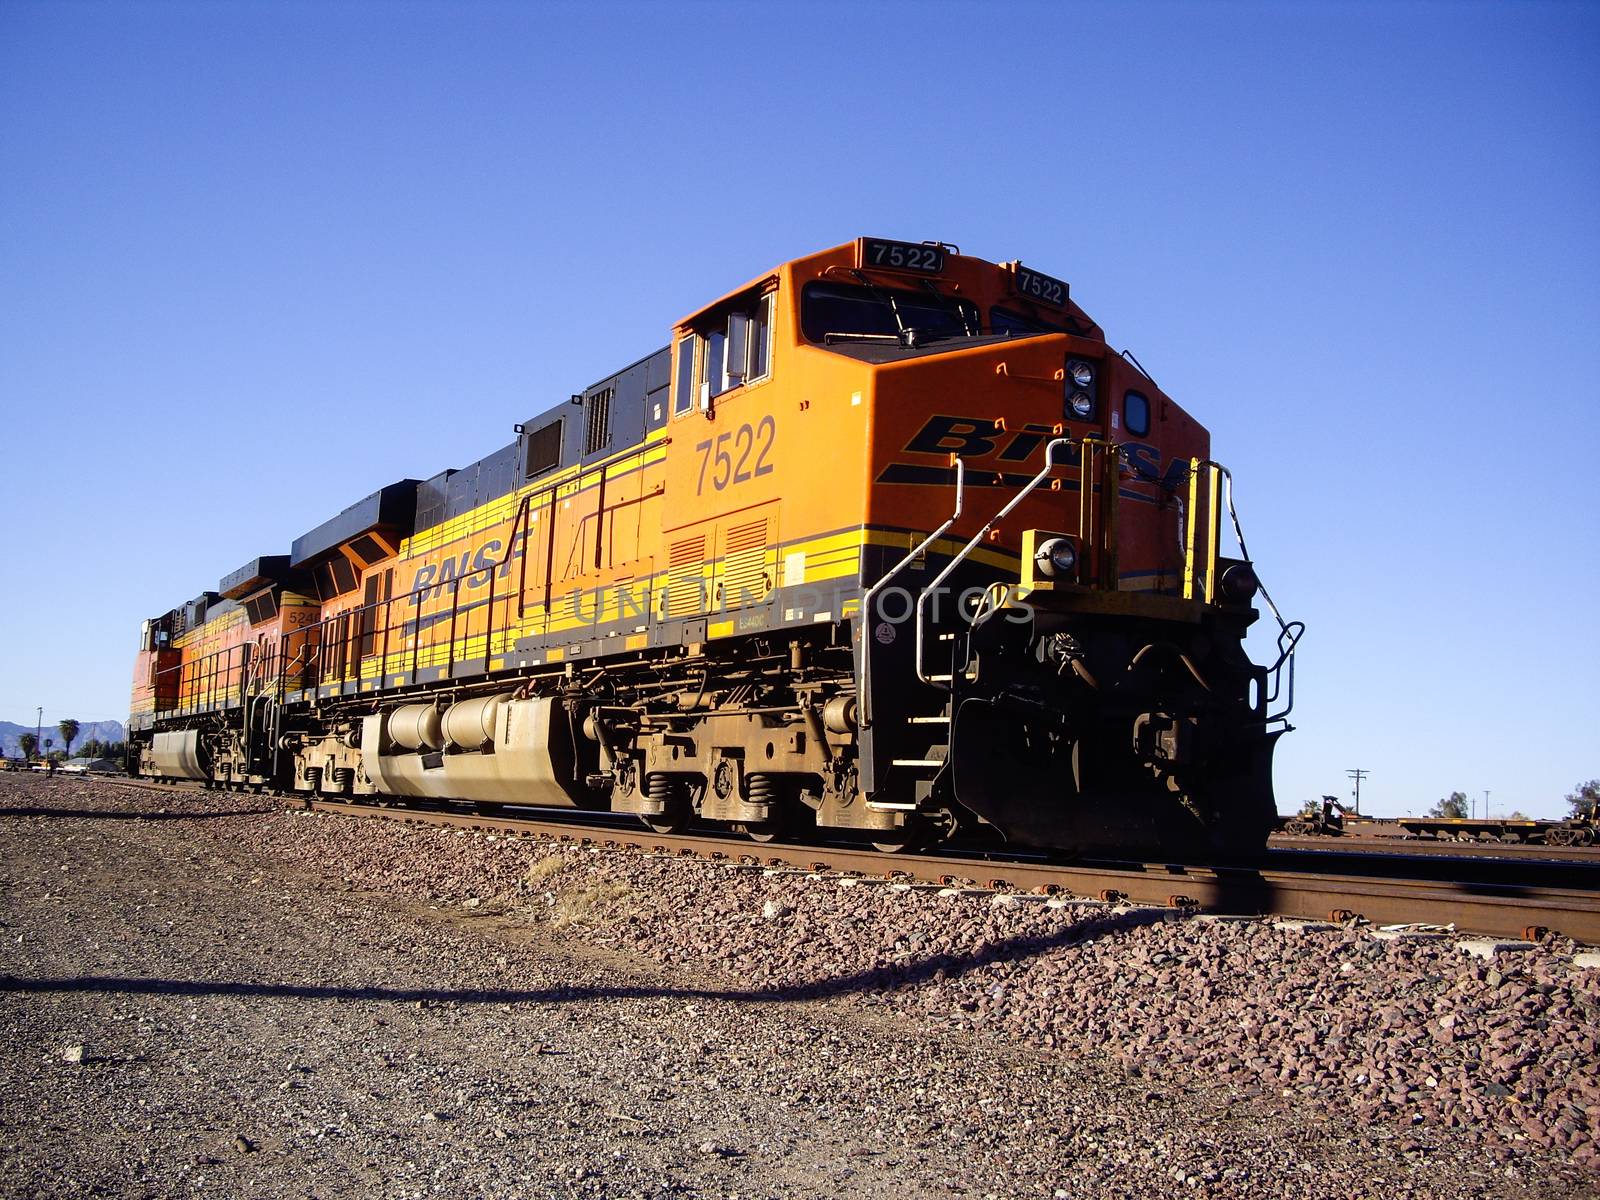 Distinctive orange and yellow Burlington Northern Santa Fe Locomotive freight train No. 7522 on the tracks at the town of Needles, California. Photo taken in February 2013.